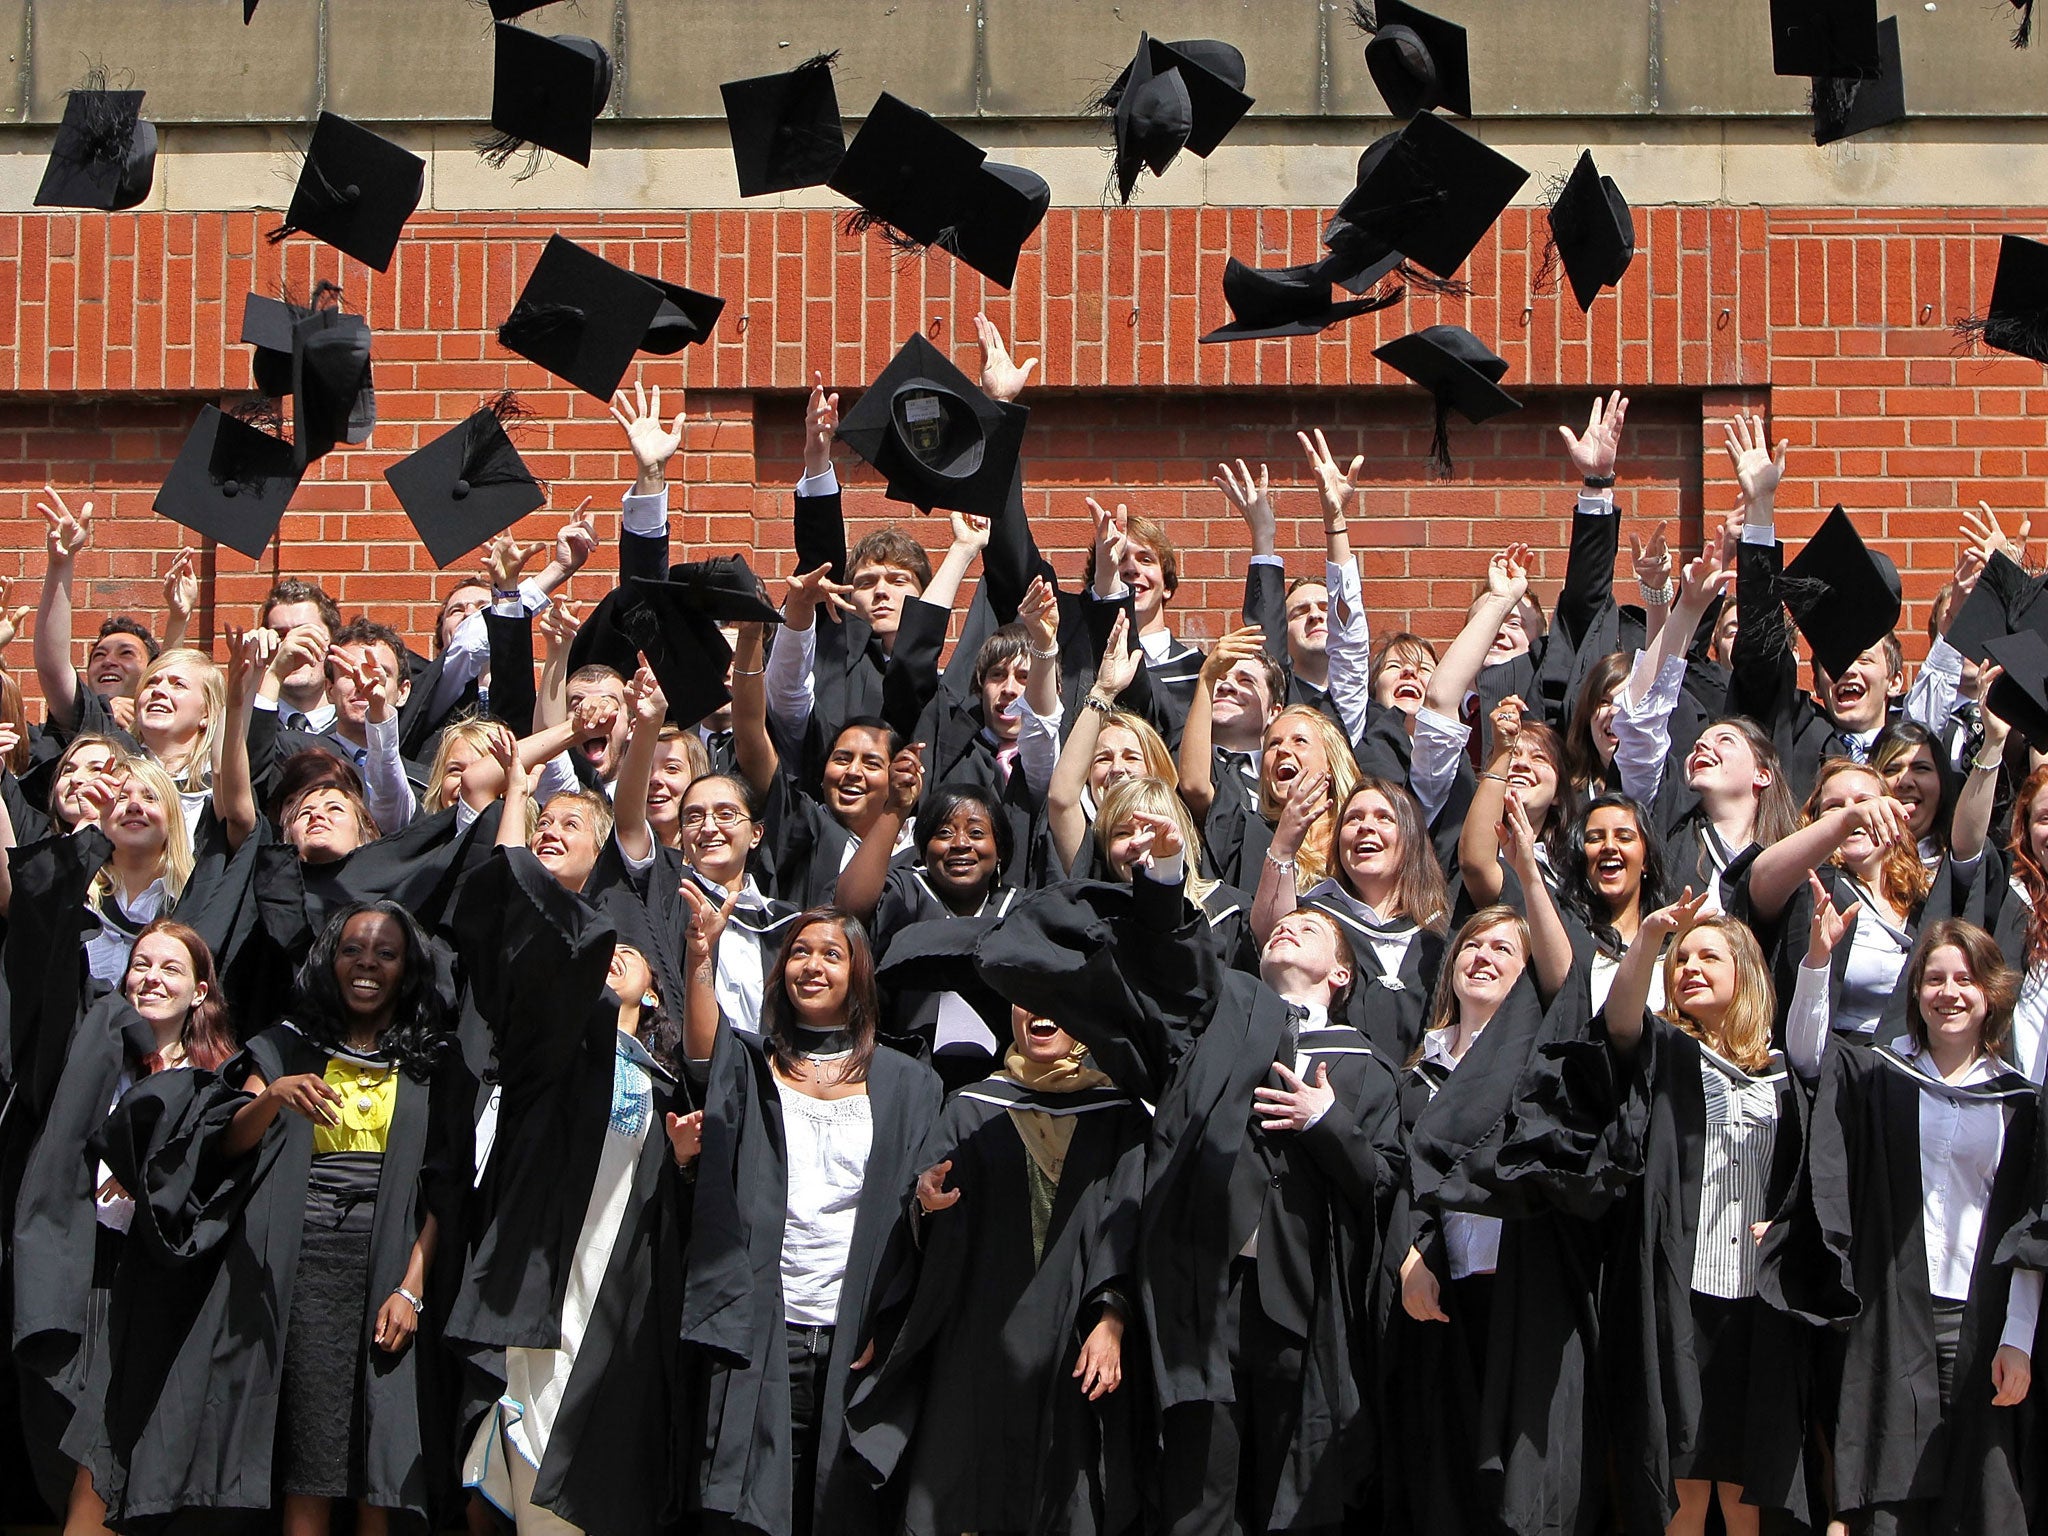 The vast majority of graduates will not walk into their dream career